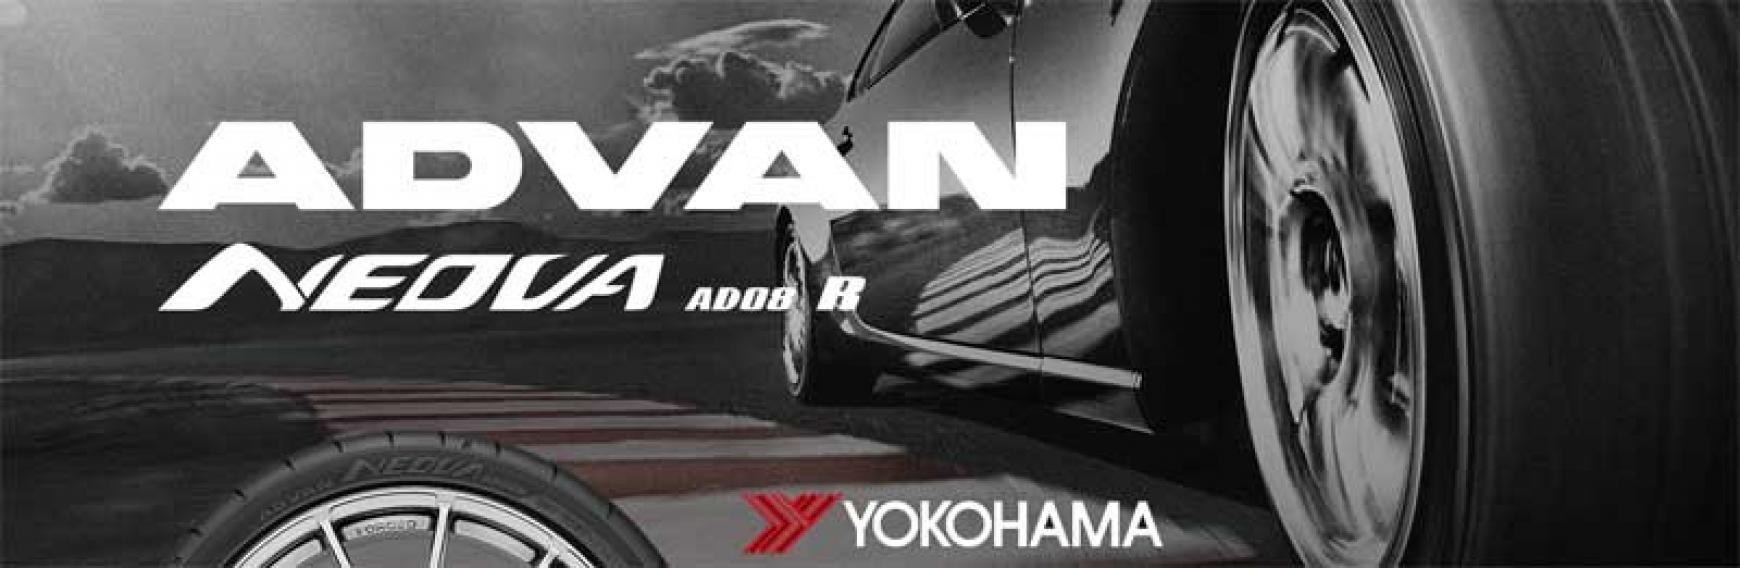 Yokohama ADVAN Neova AD08R